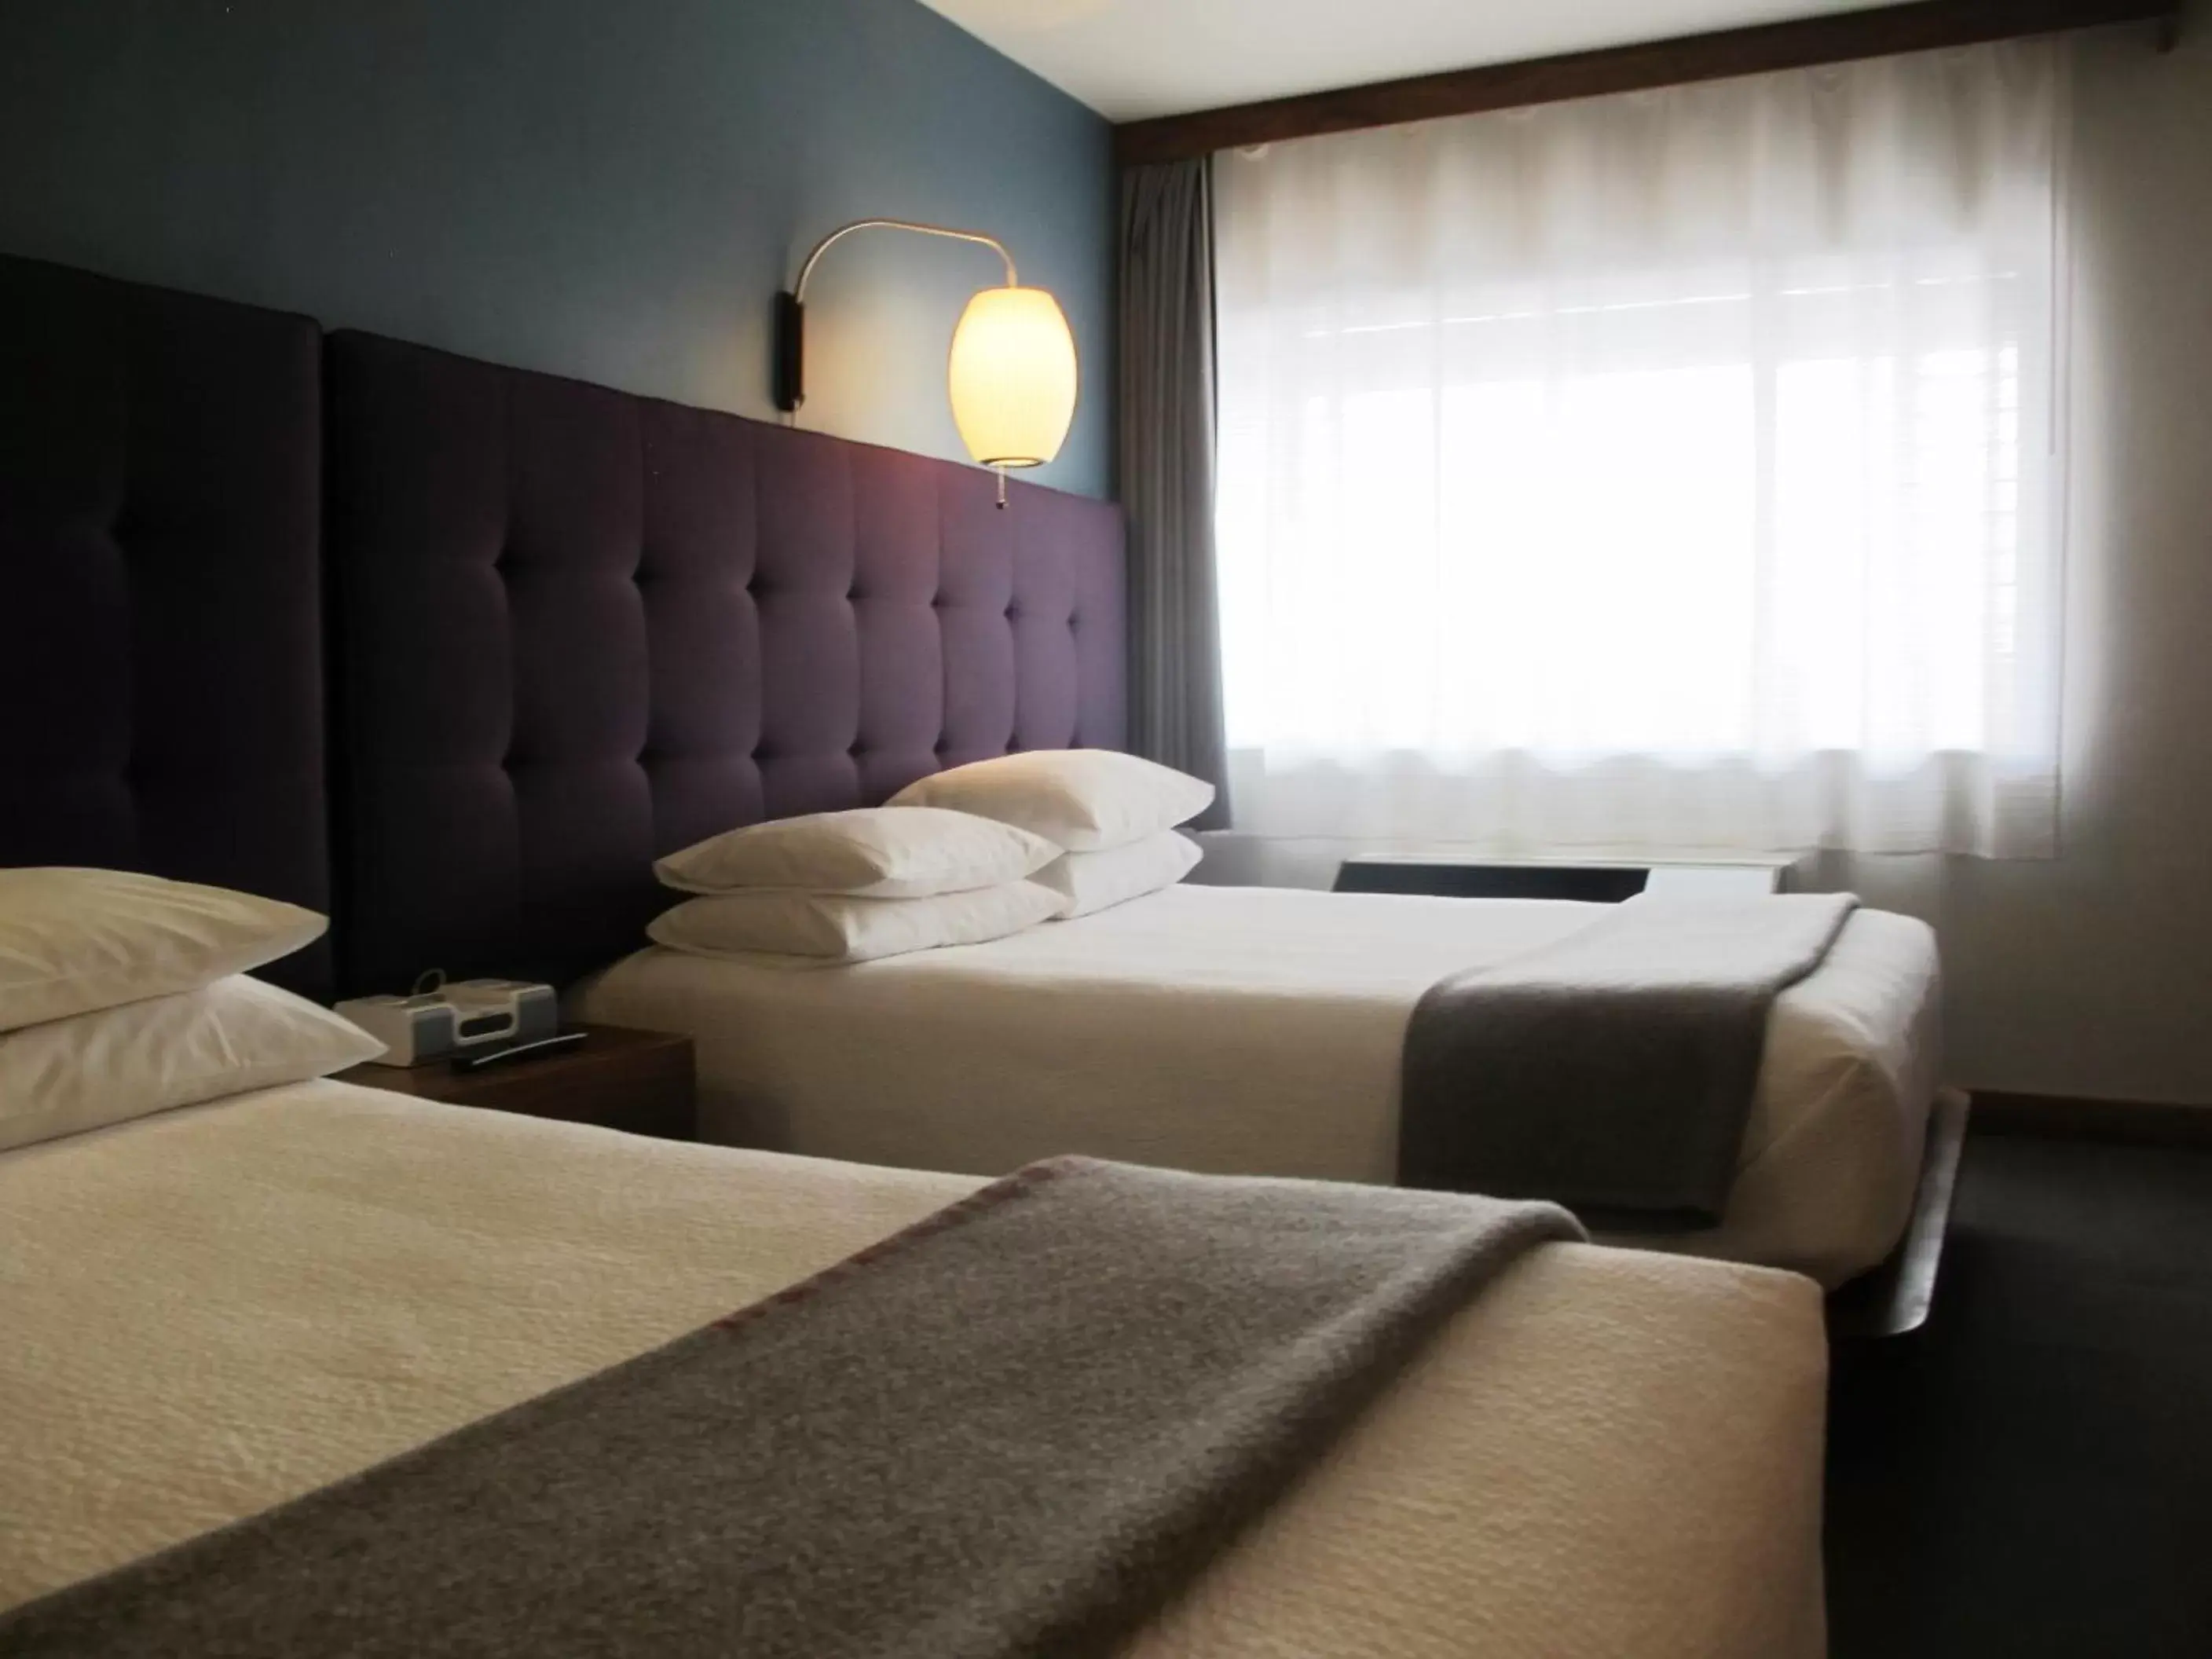 Queen Room with Two Queen Beds in Modern Hotel